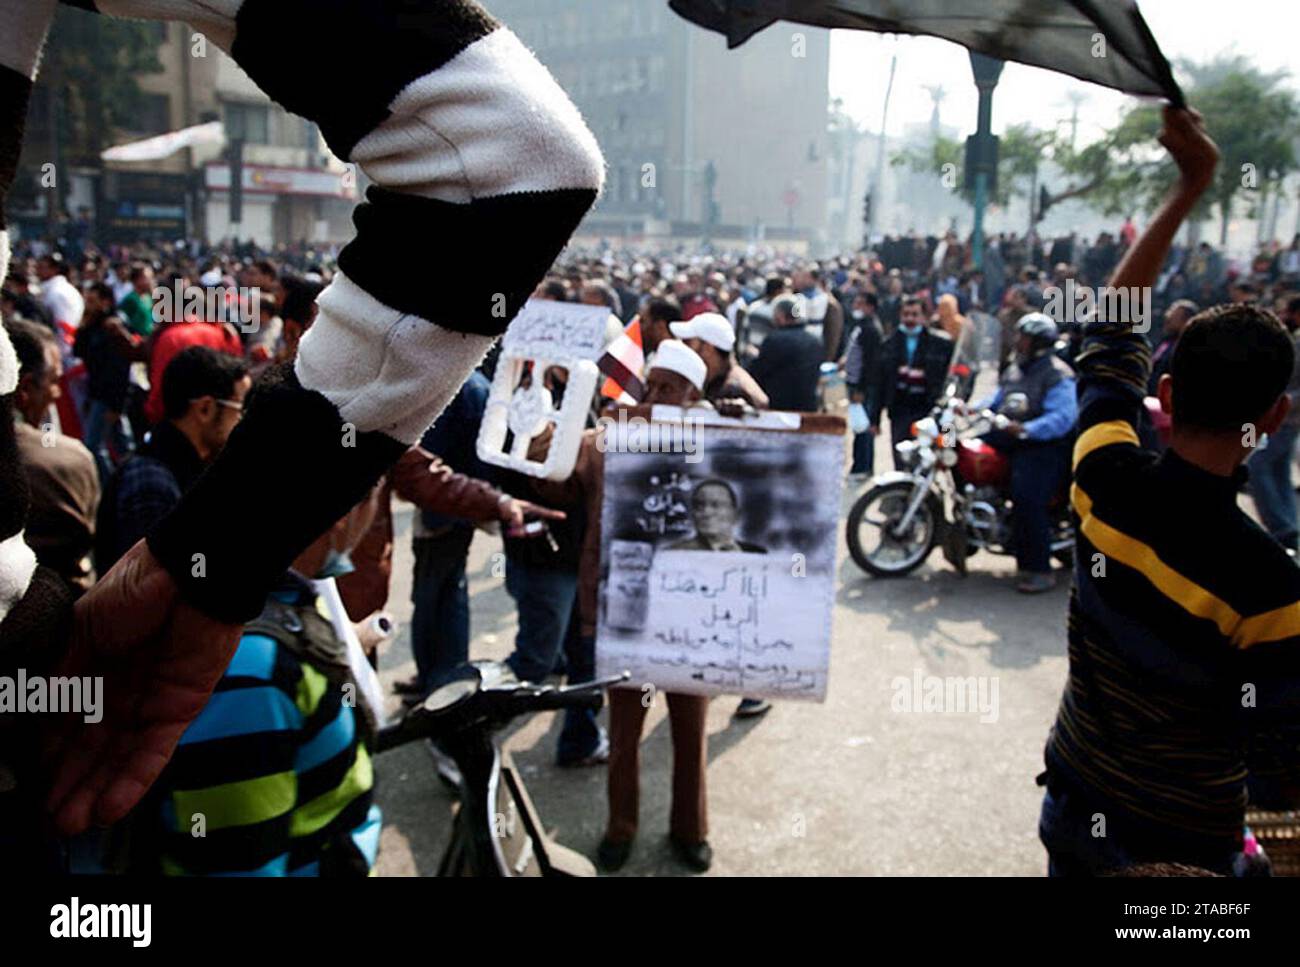 Wochen - Kairoer Proteste, 22. November 2011 - 01. Stockfoto